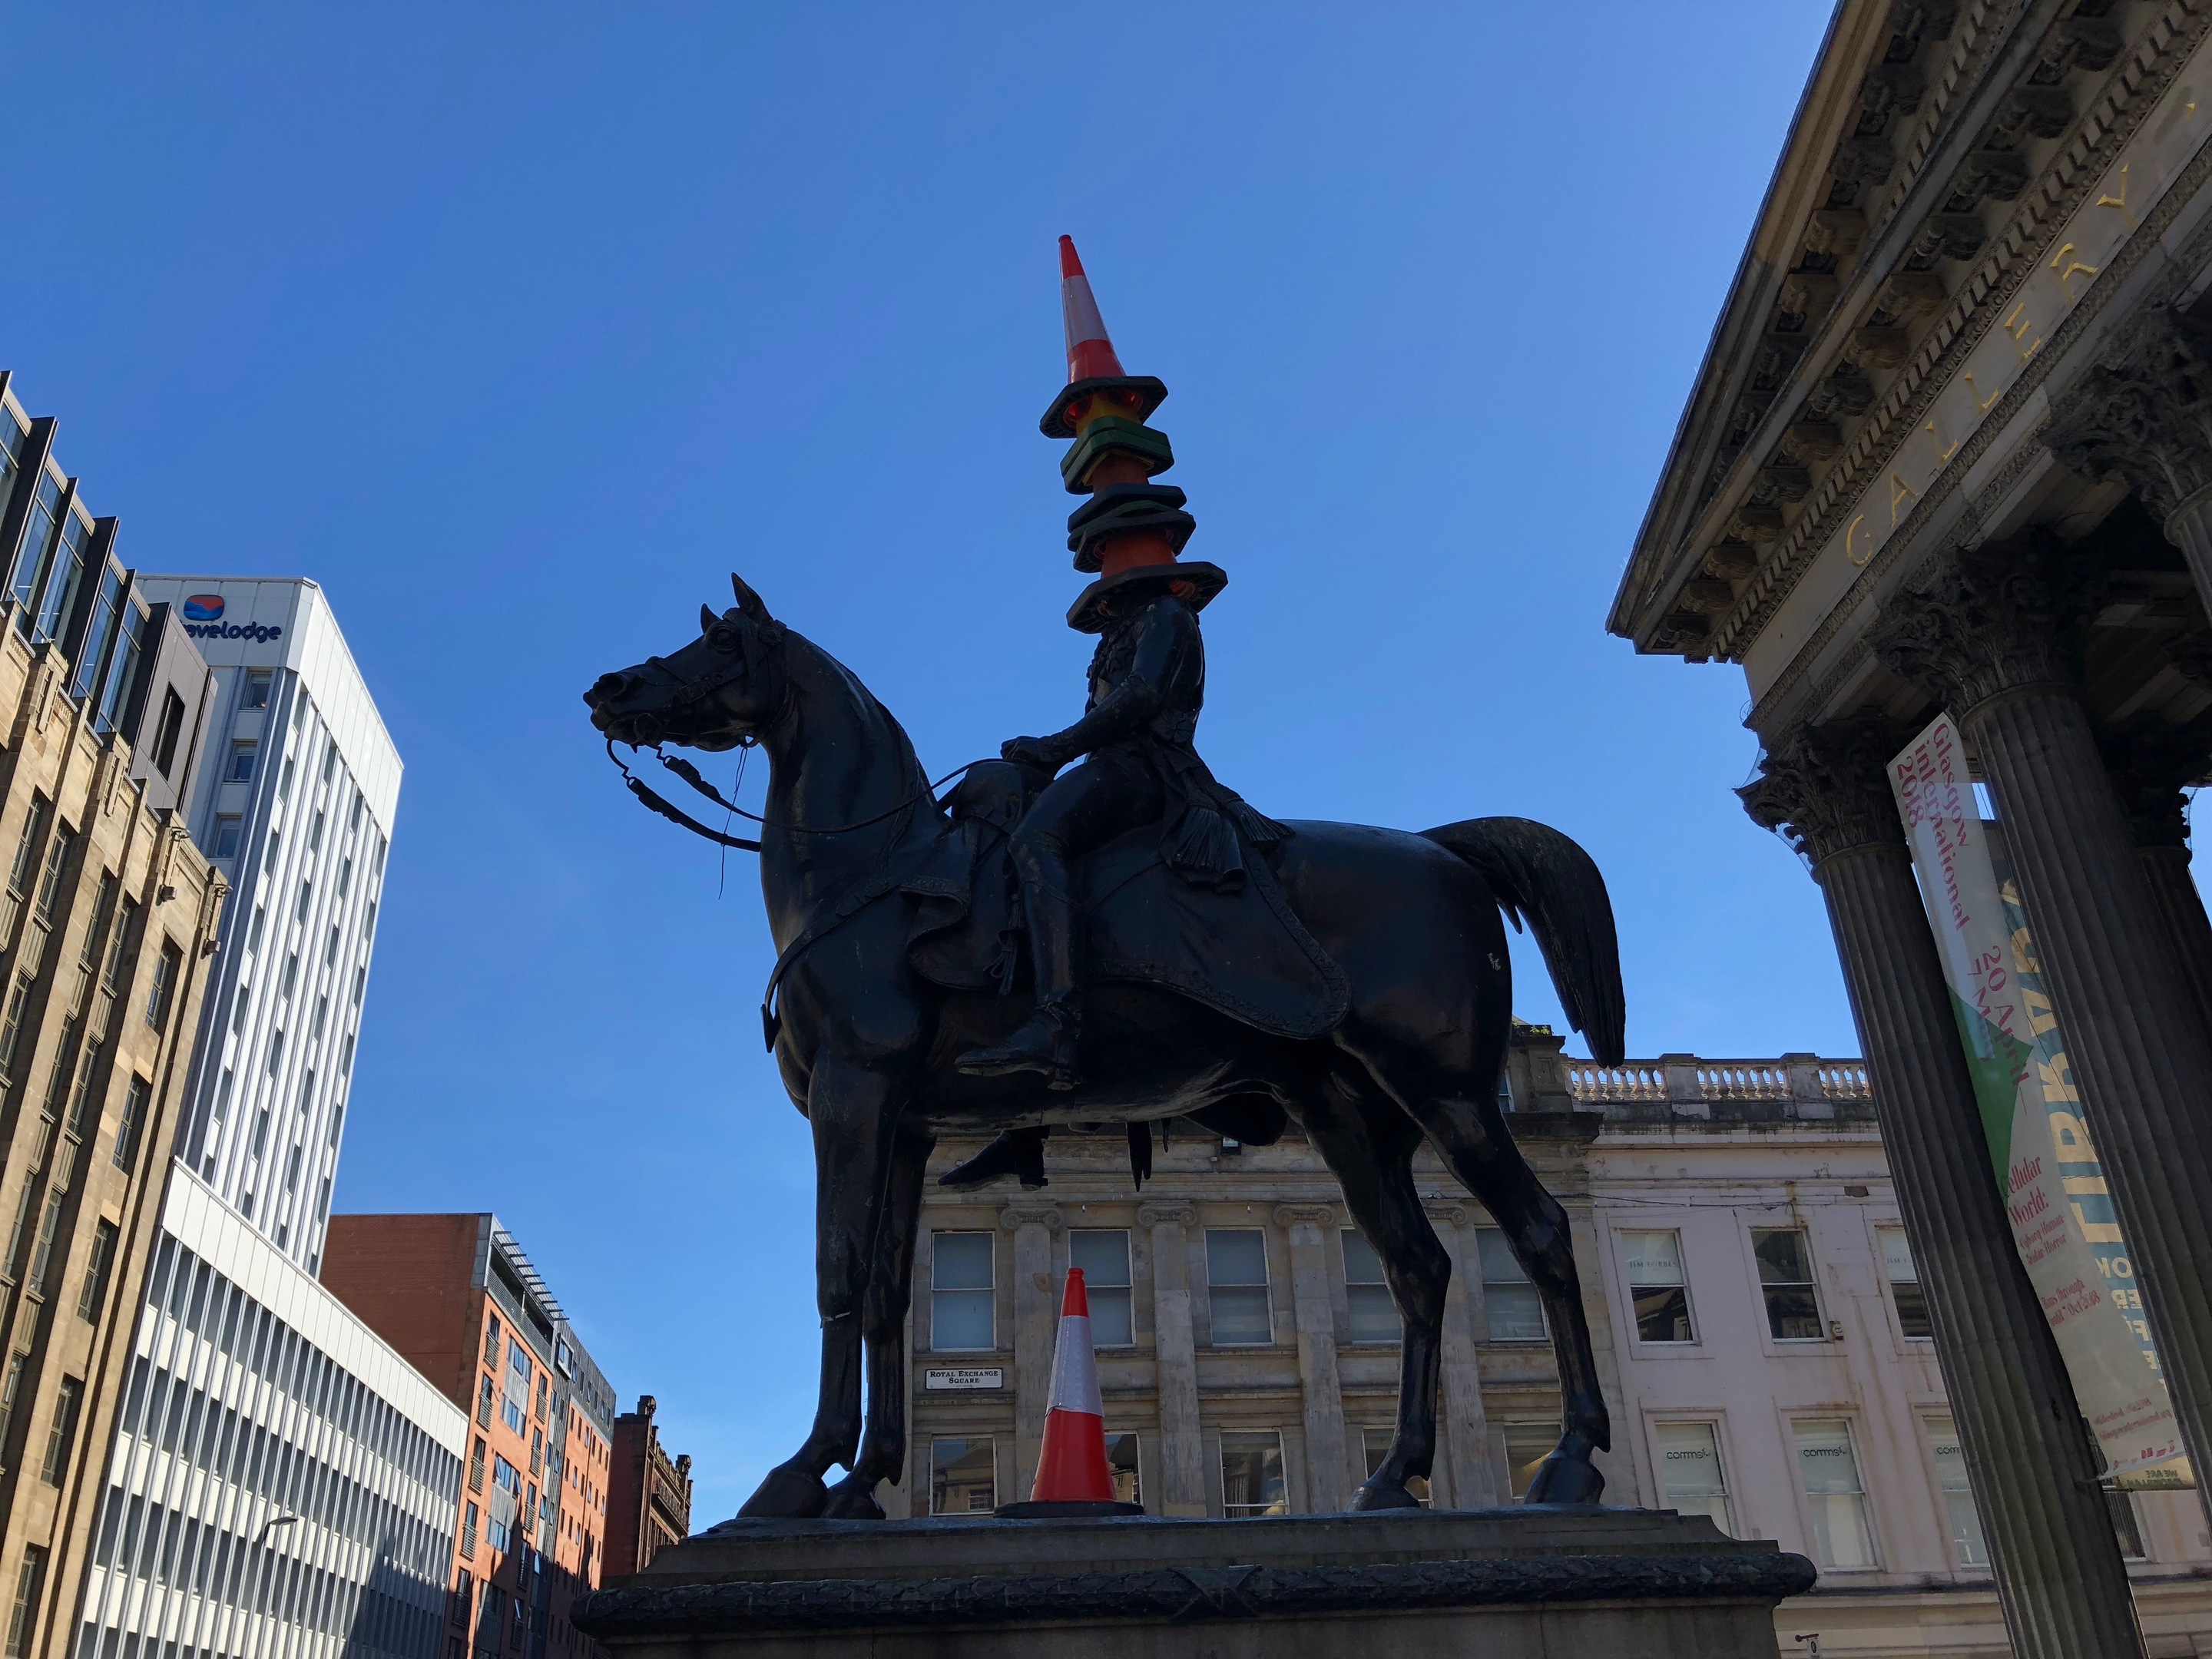 Glasgows' Duke of Wellington Statue enjoys a few cones in the sunshine (Ross Crae / DC Thomson)